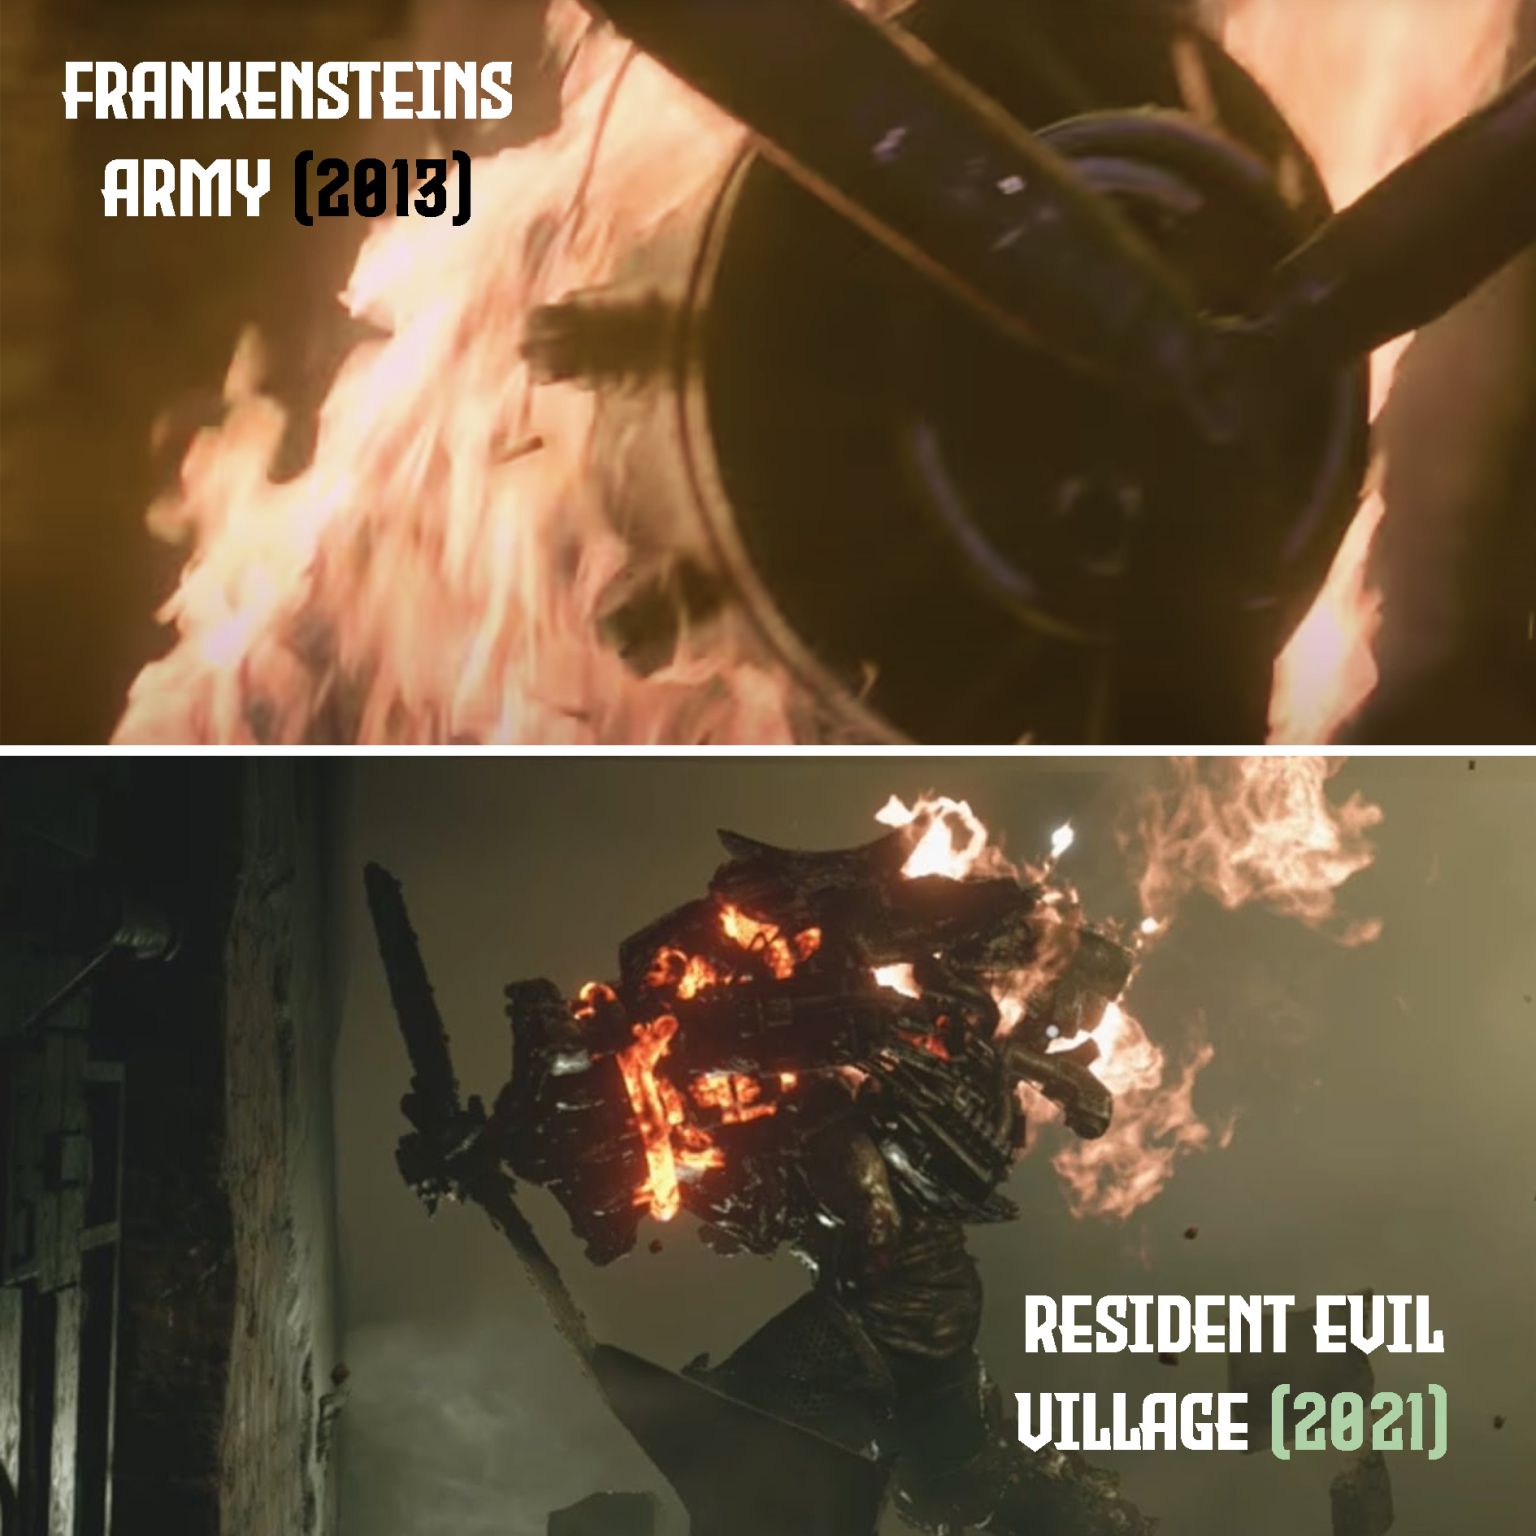 Resident Evil Village - Frankenstein's Army comparison images